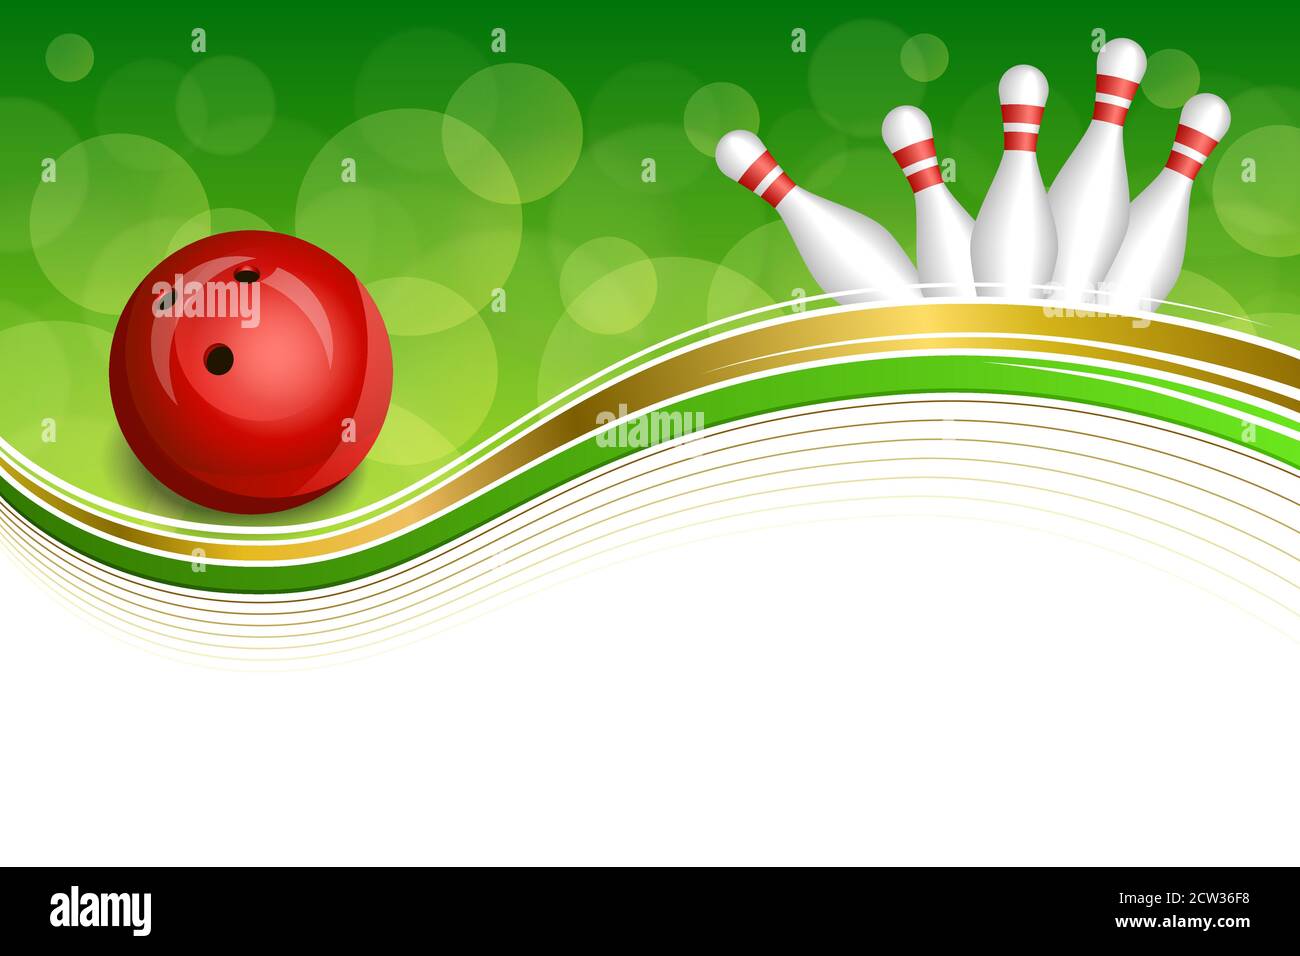 Hintergrund abstrakt grün Bowling rote Kugel Gold Rahmen Illustration Vektor Stock Vektor